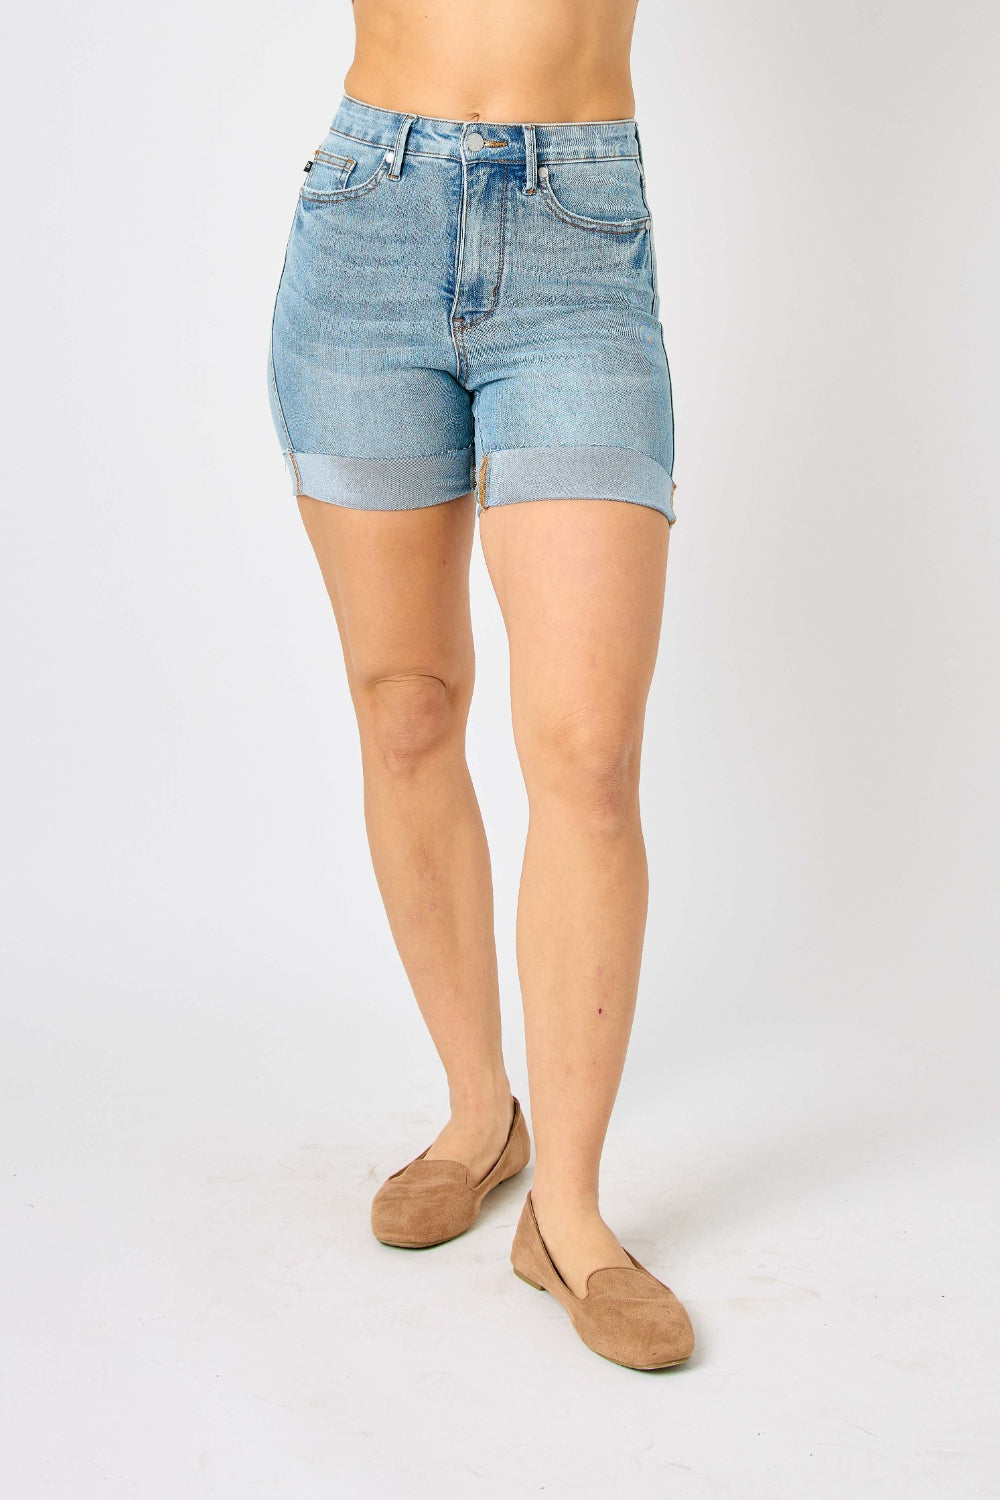 Judy Blue Full Size Tummy Control Denim Shorts - Stylish, Comfortable and Flattering